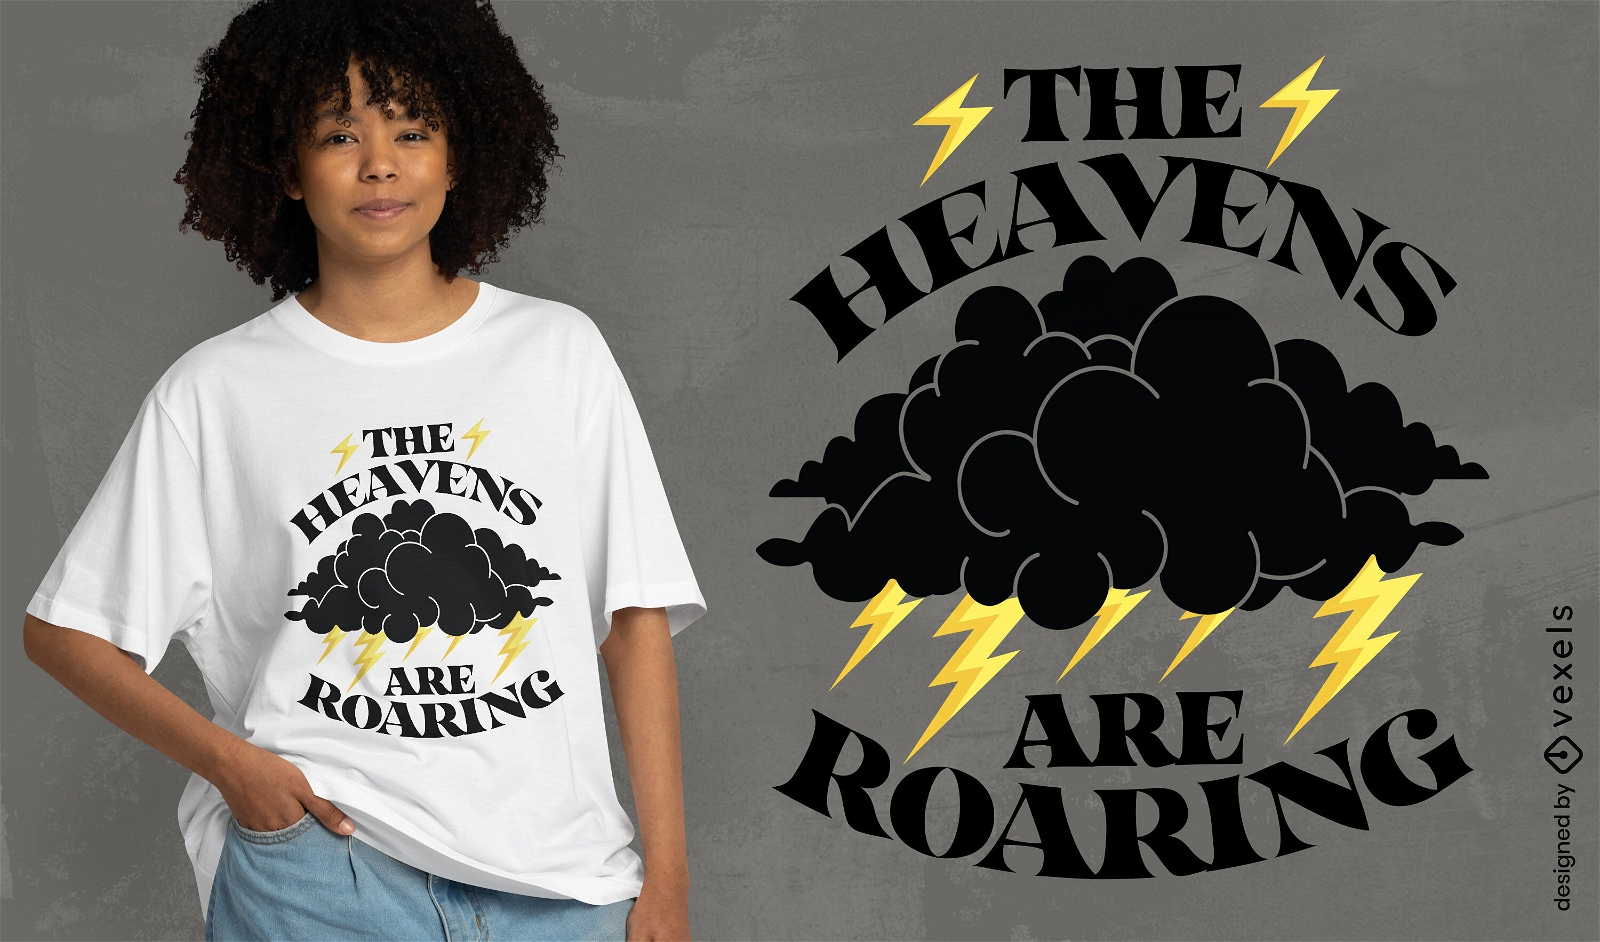 The heavens are roaring t-shirt design